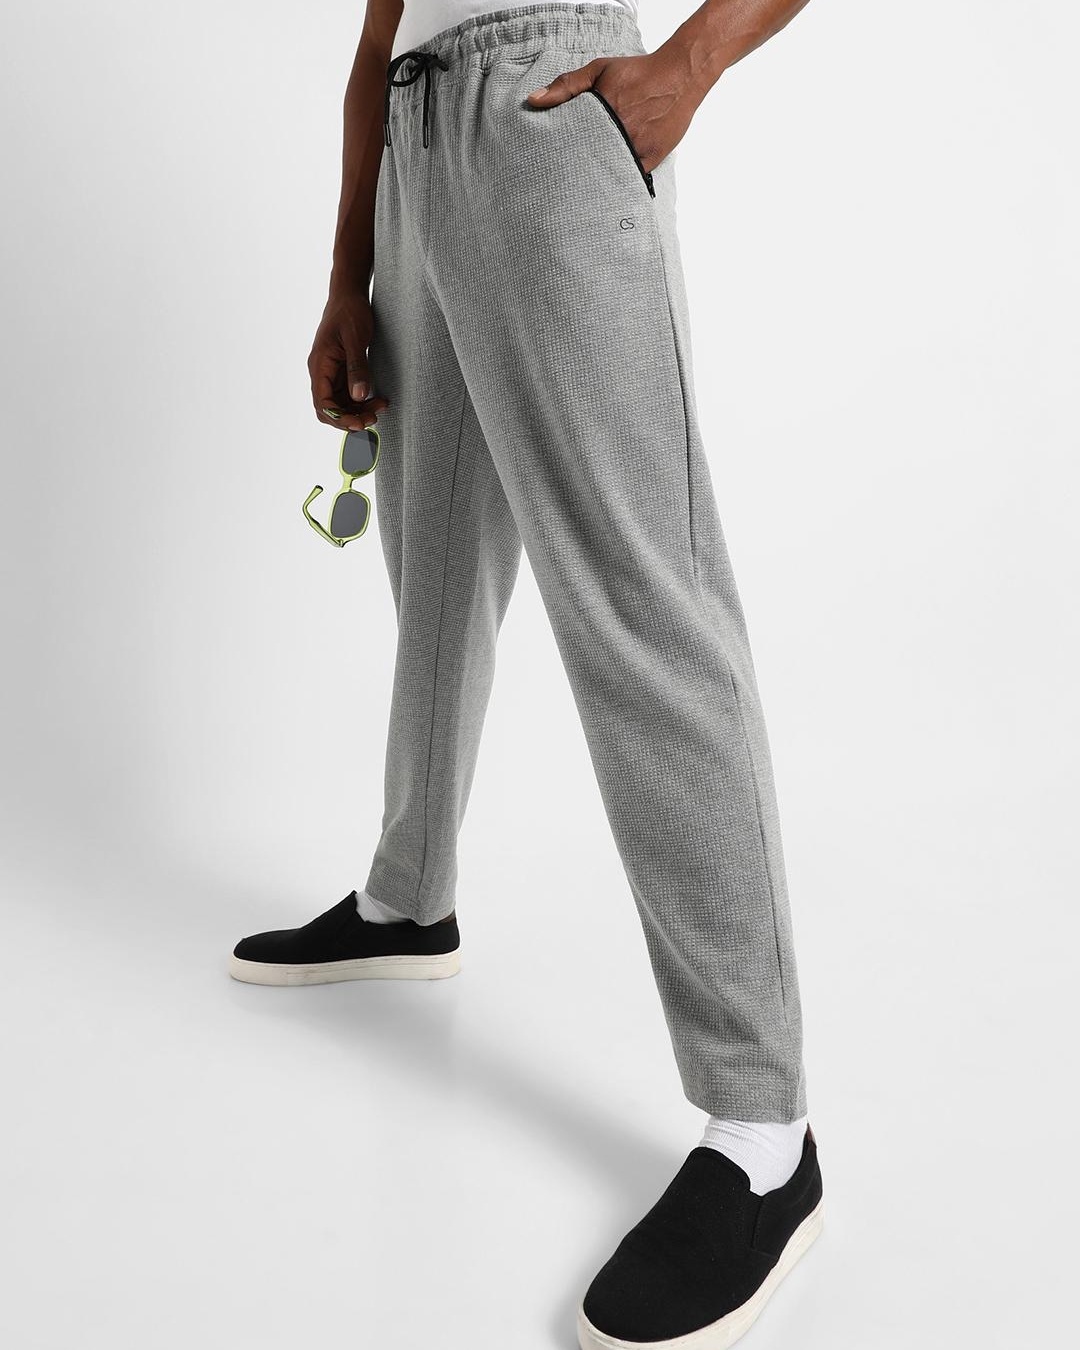 Buy Men's Grey Track Pants for Men Grey Online at Bewakoof